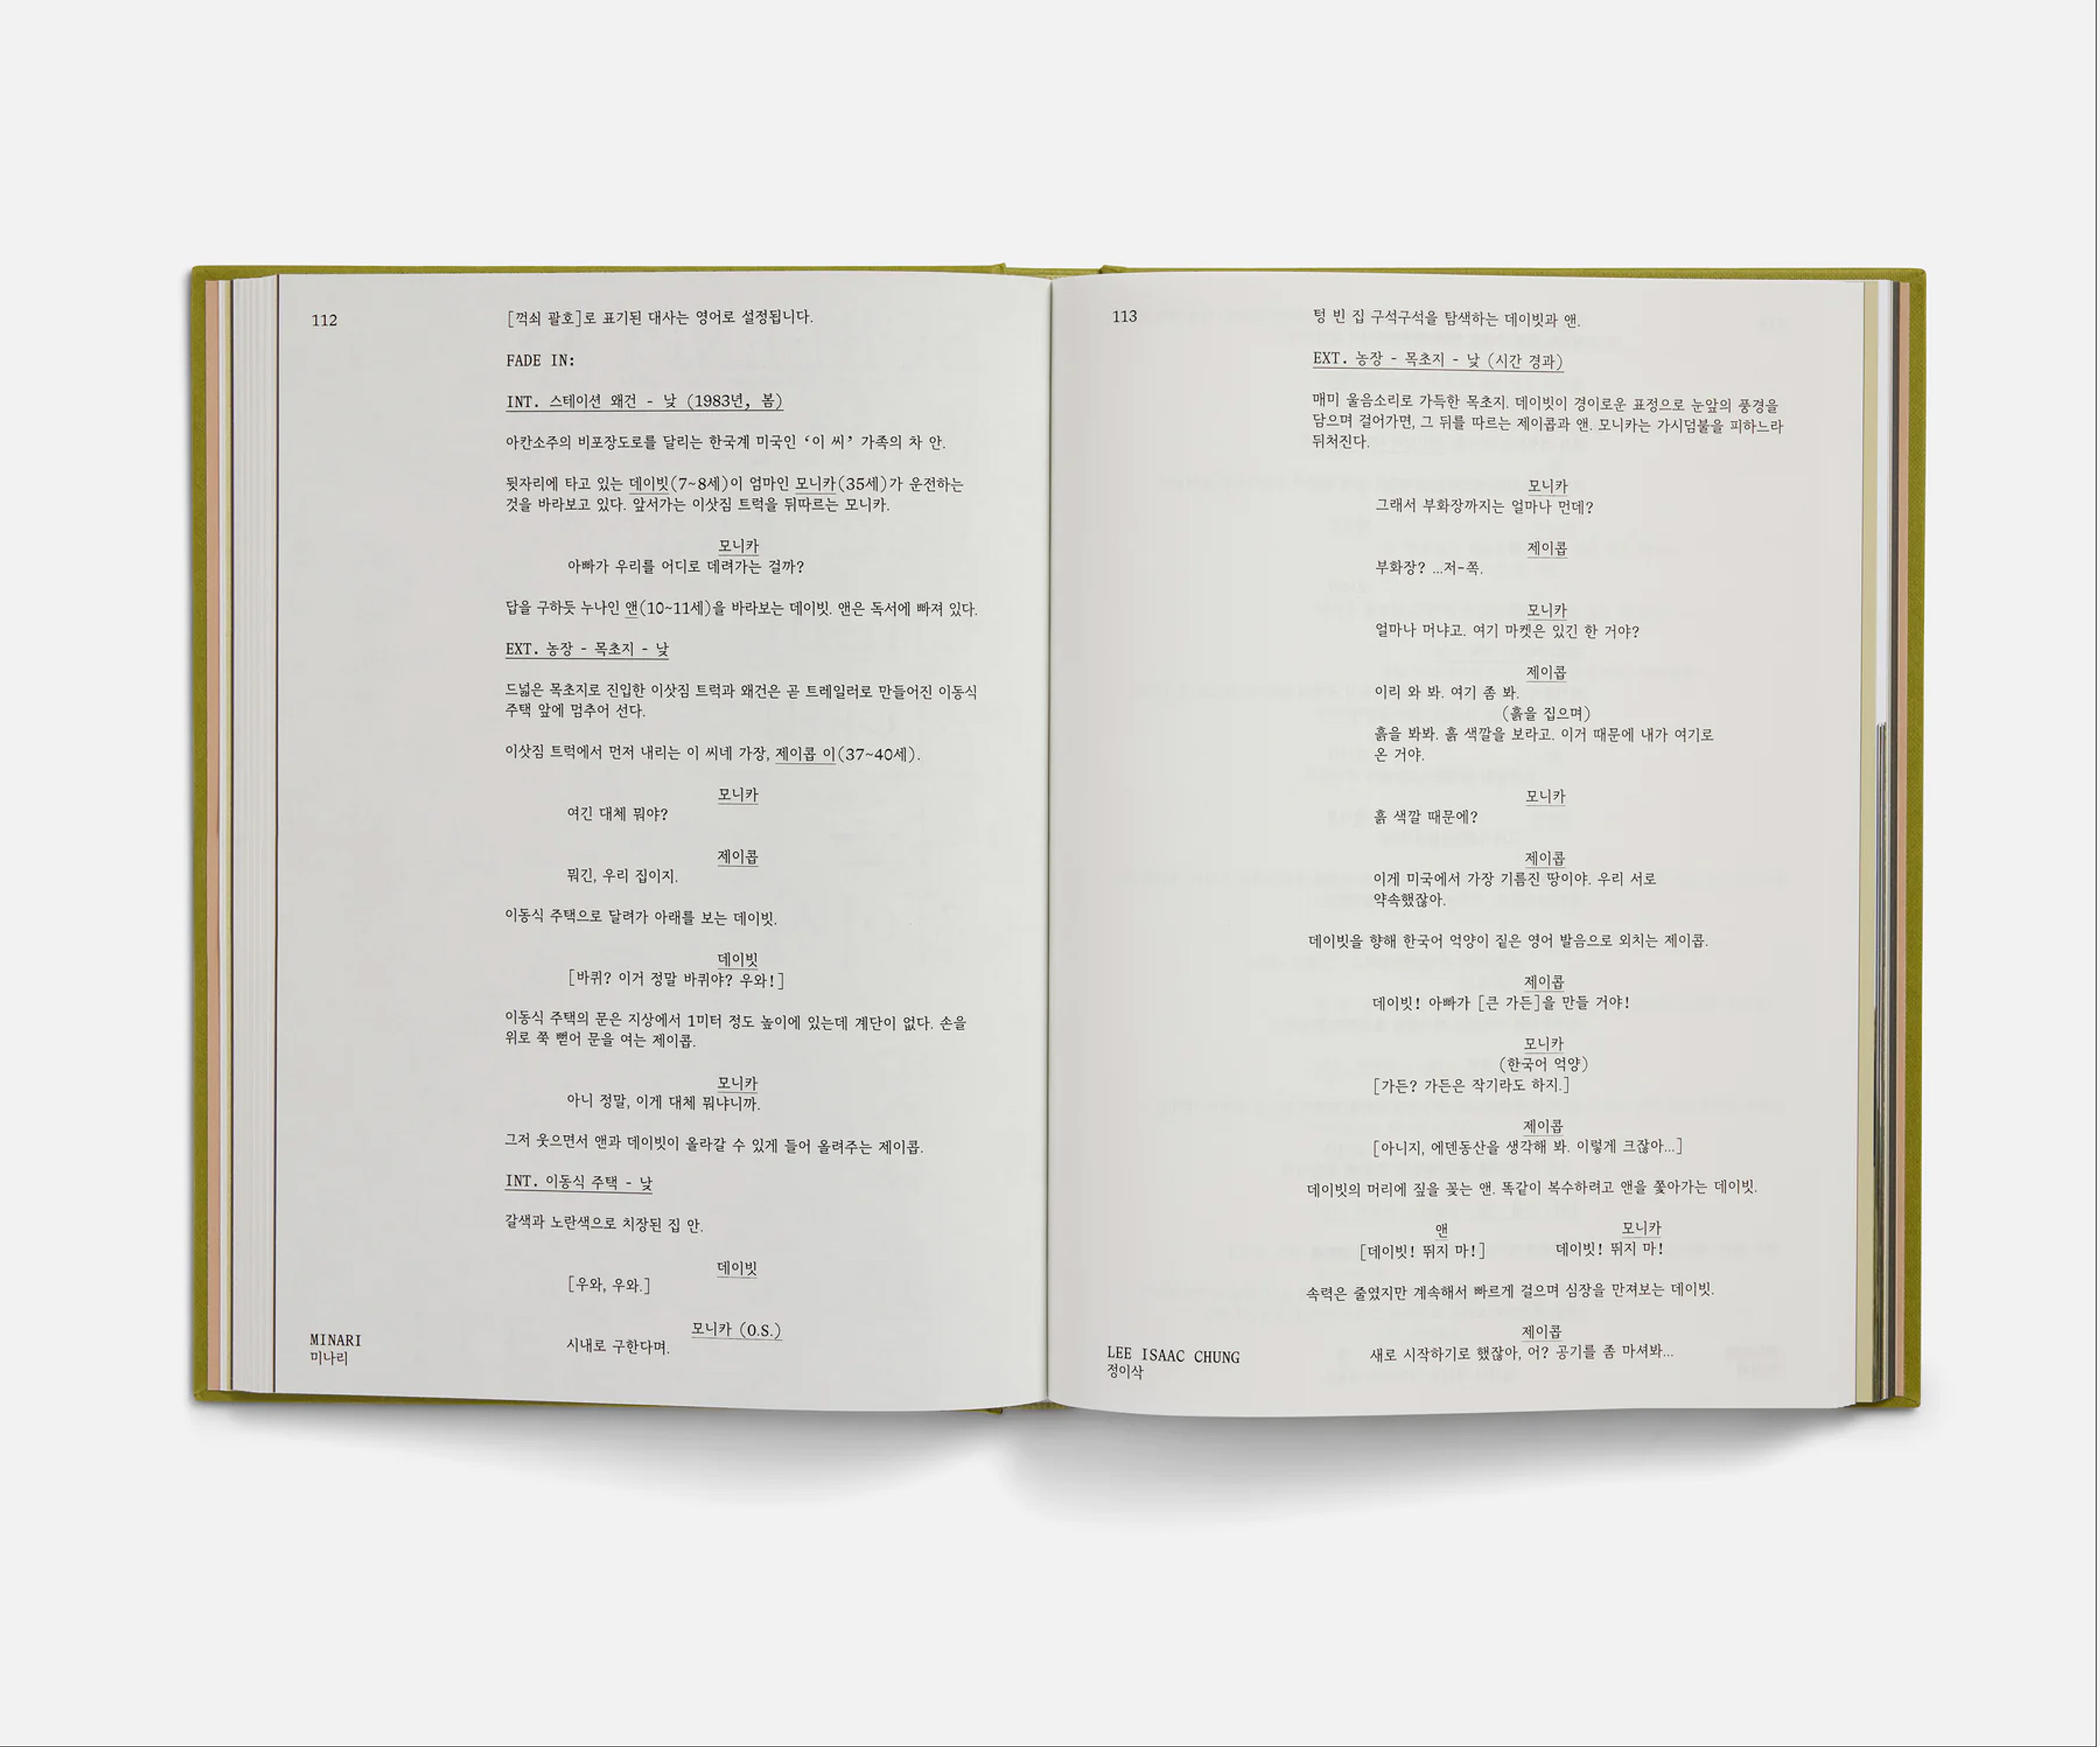 Minari Screenplay Book